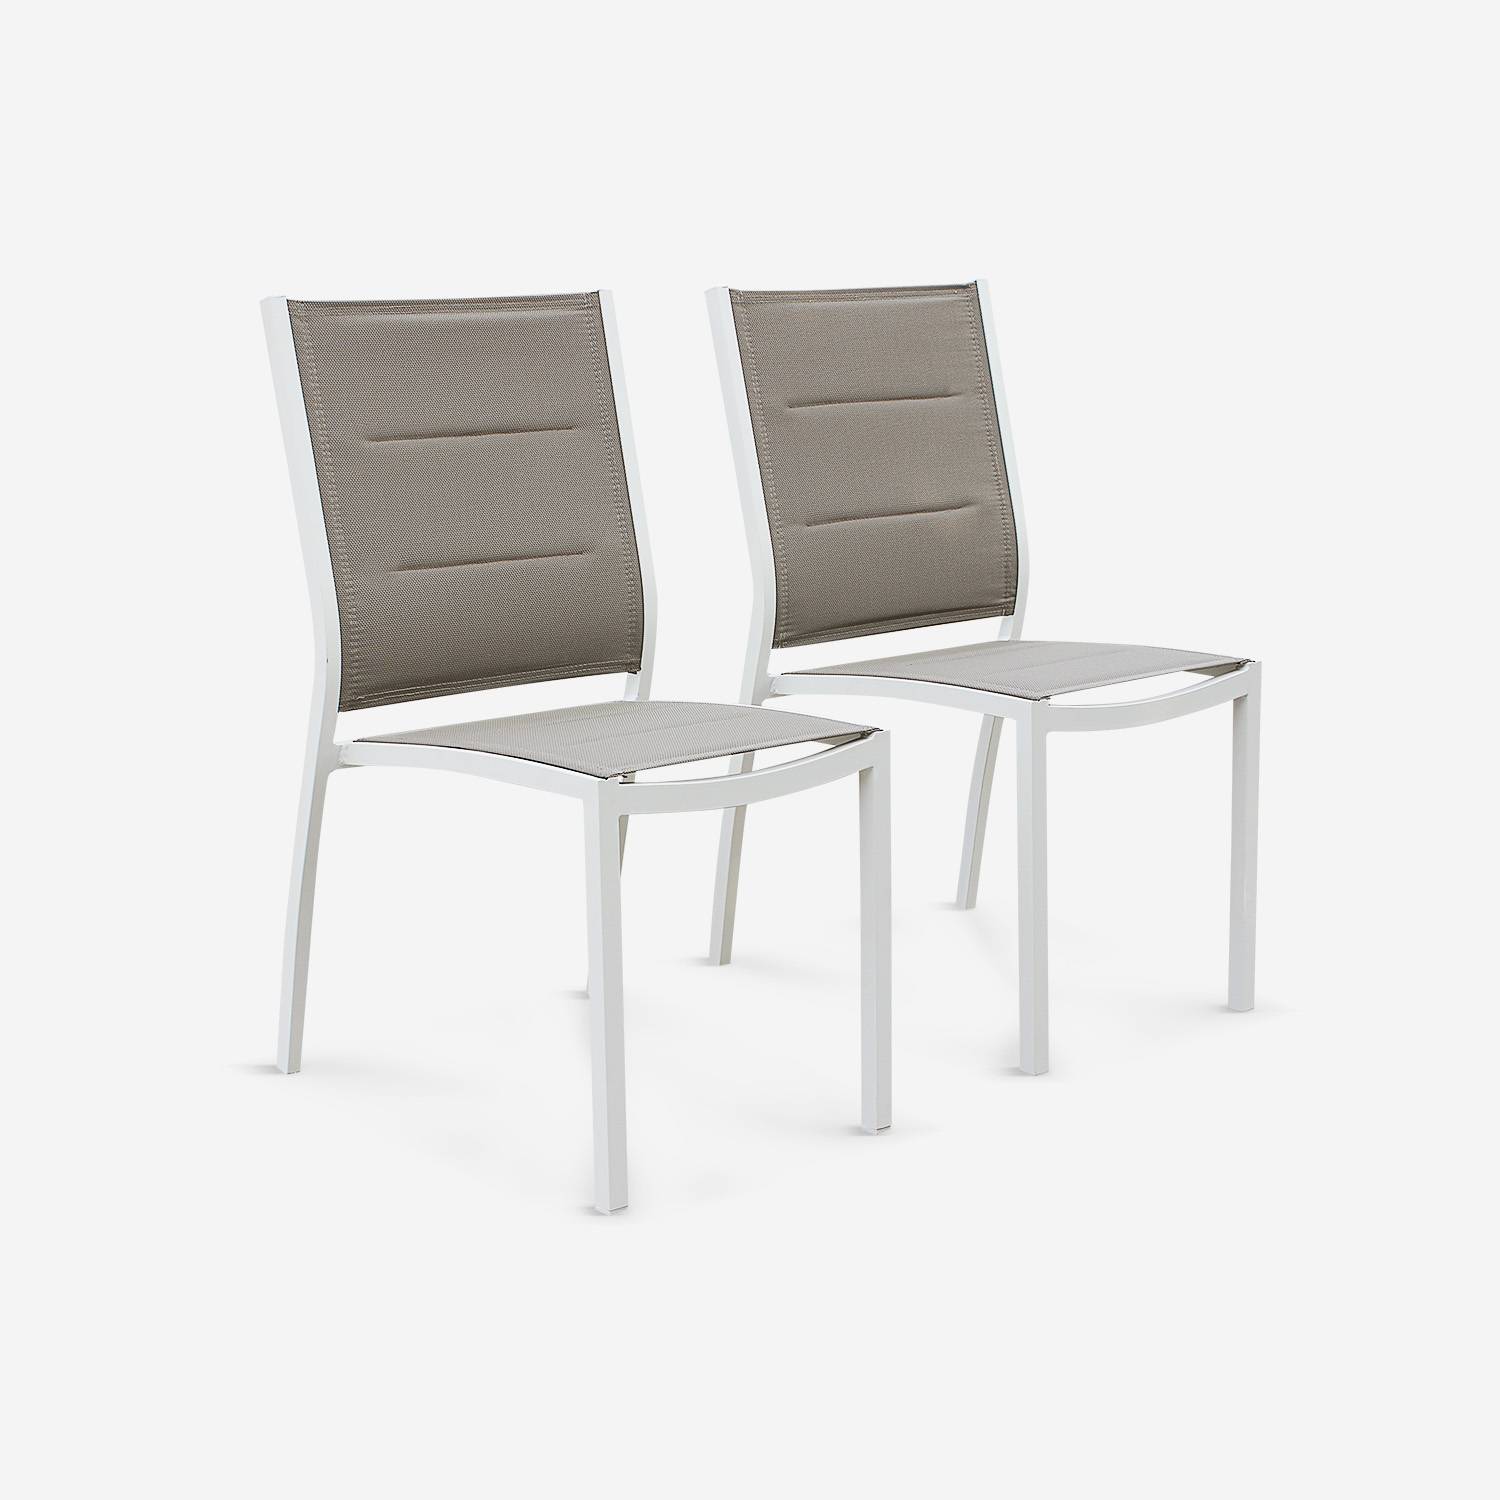 Set of 2 chairs - White aluminium and Beige-Brown textilene | sweeek